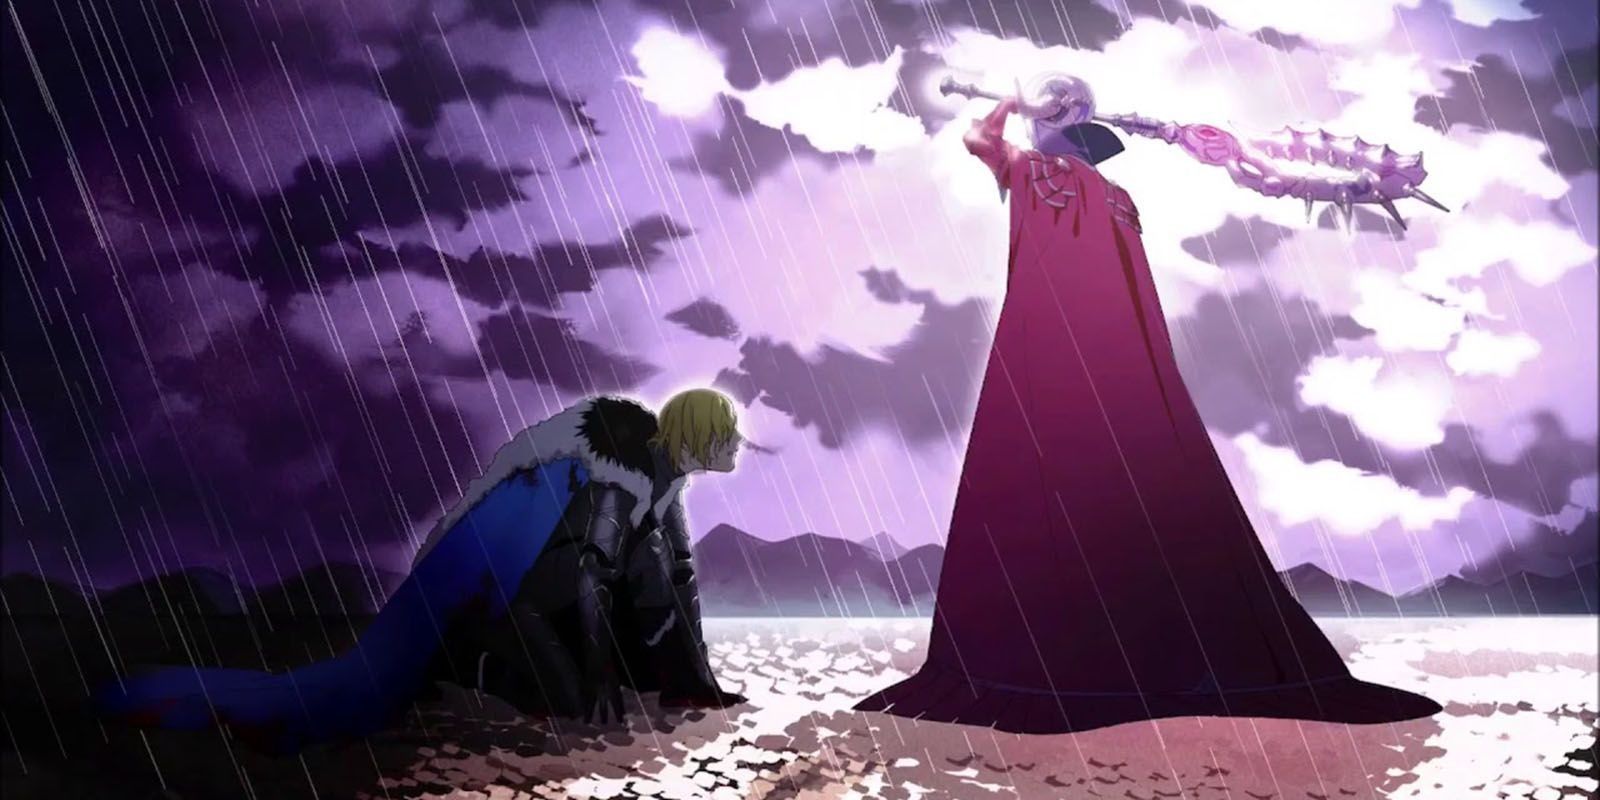 Edelgard about to kill Dimitri in the rain. 